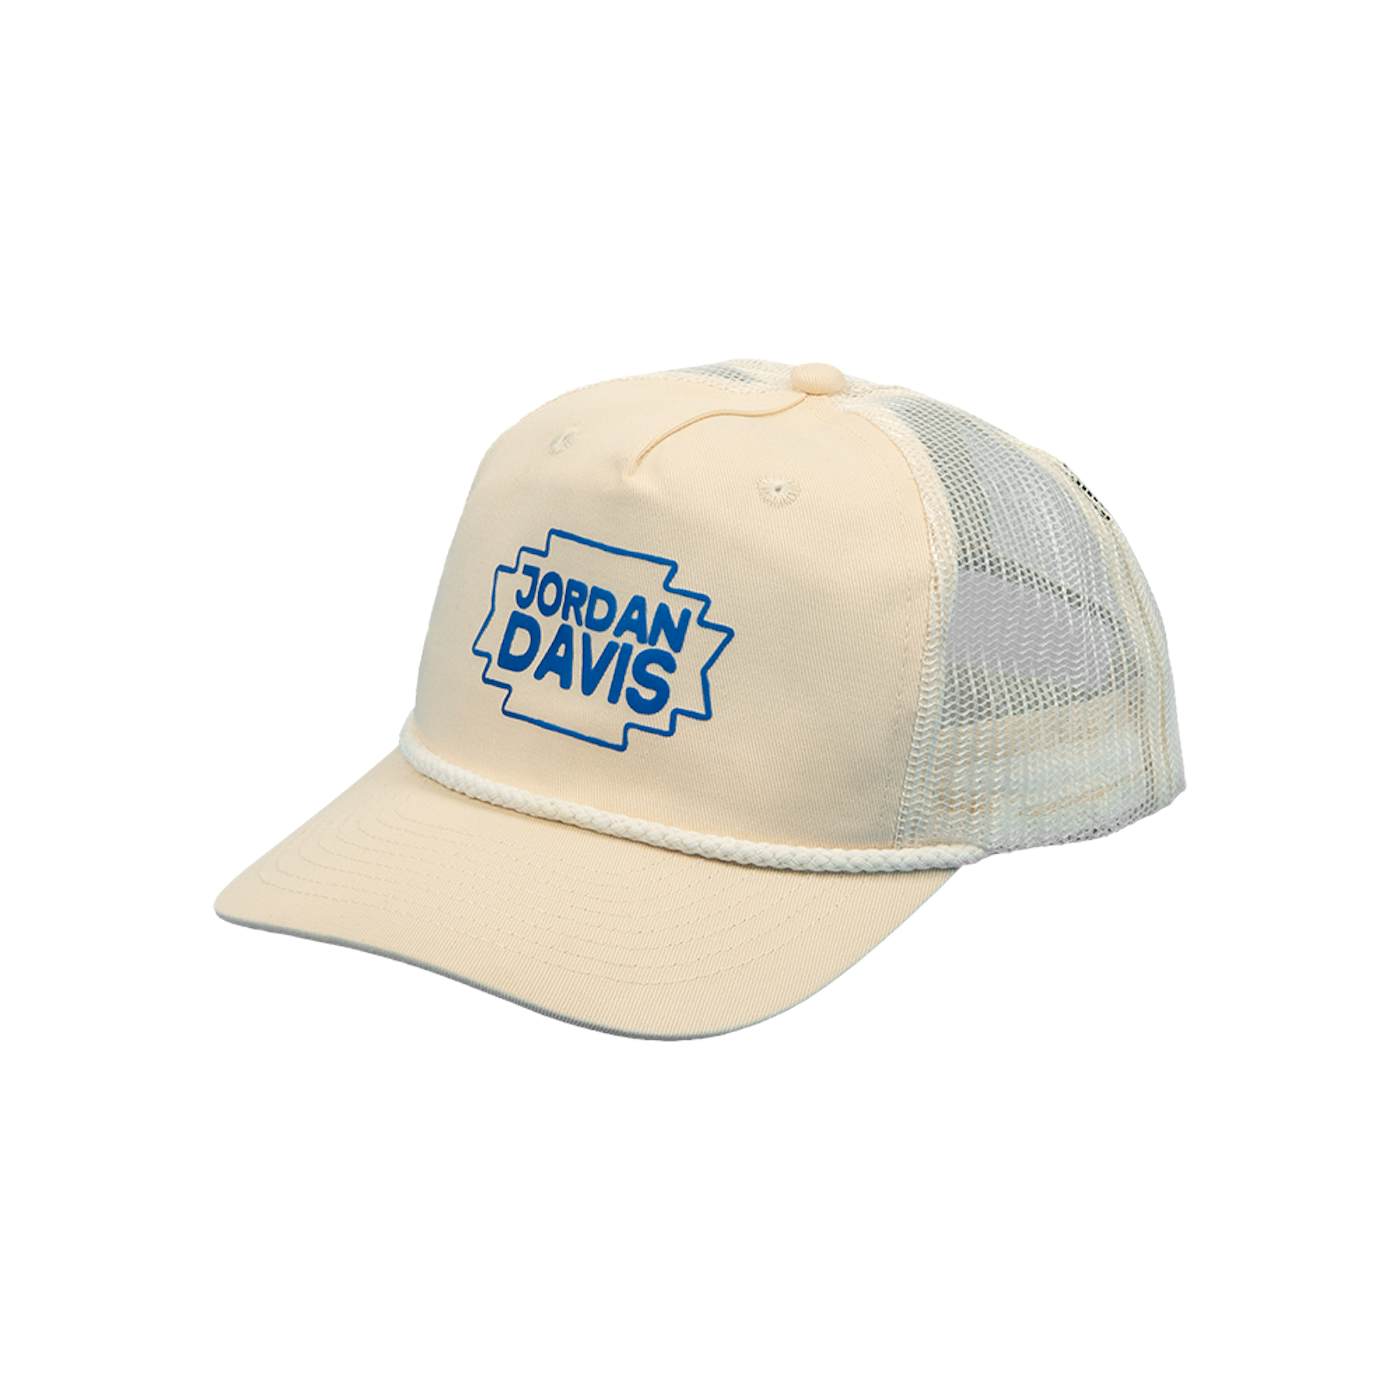 Jordan Davis Seager Hat